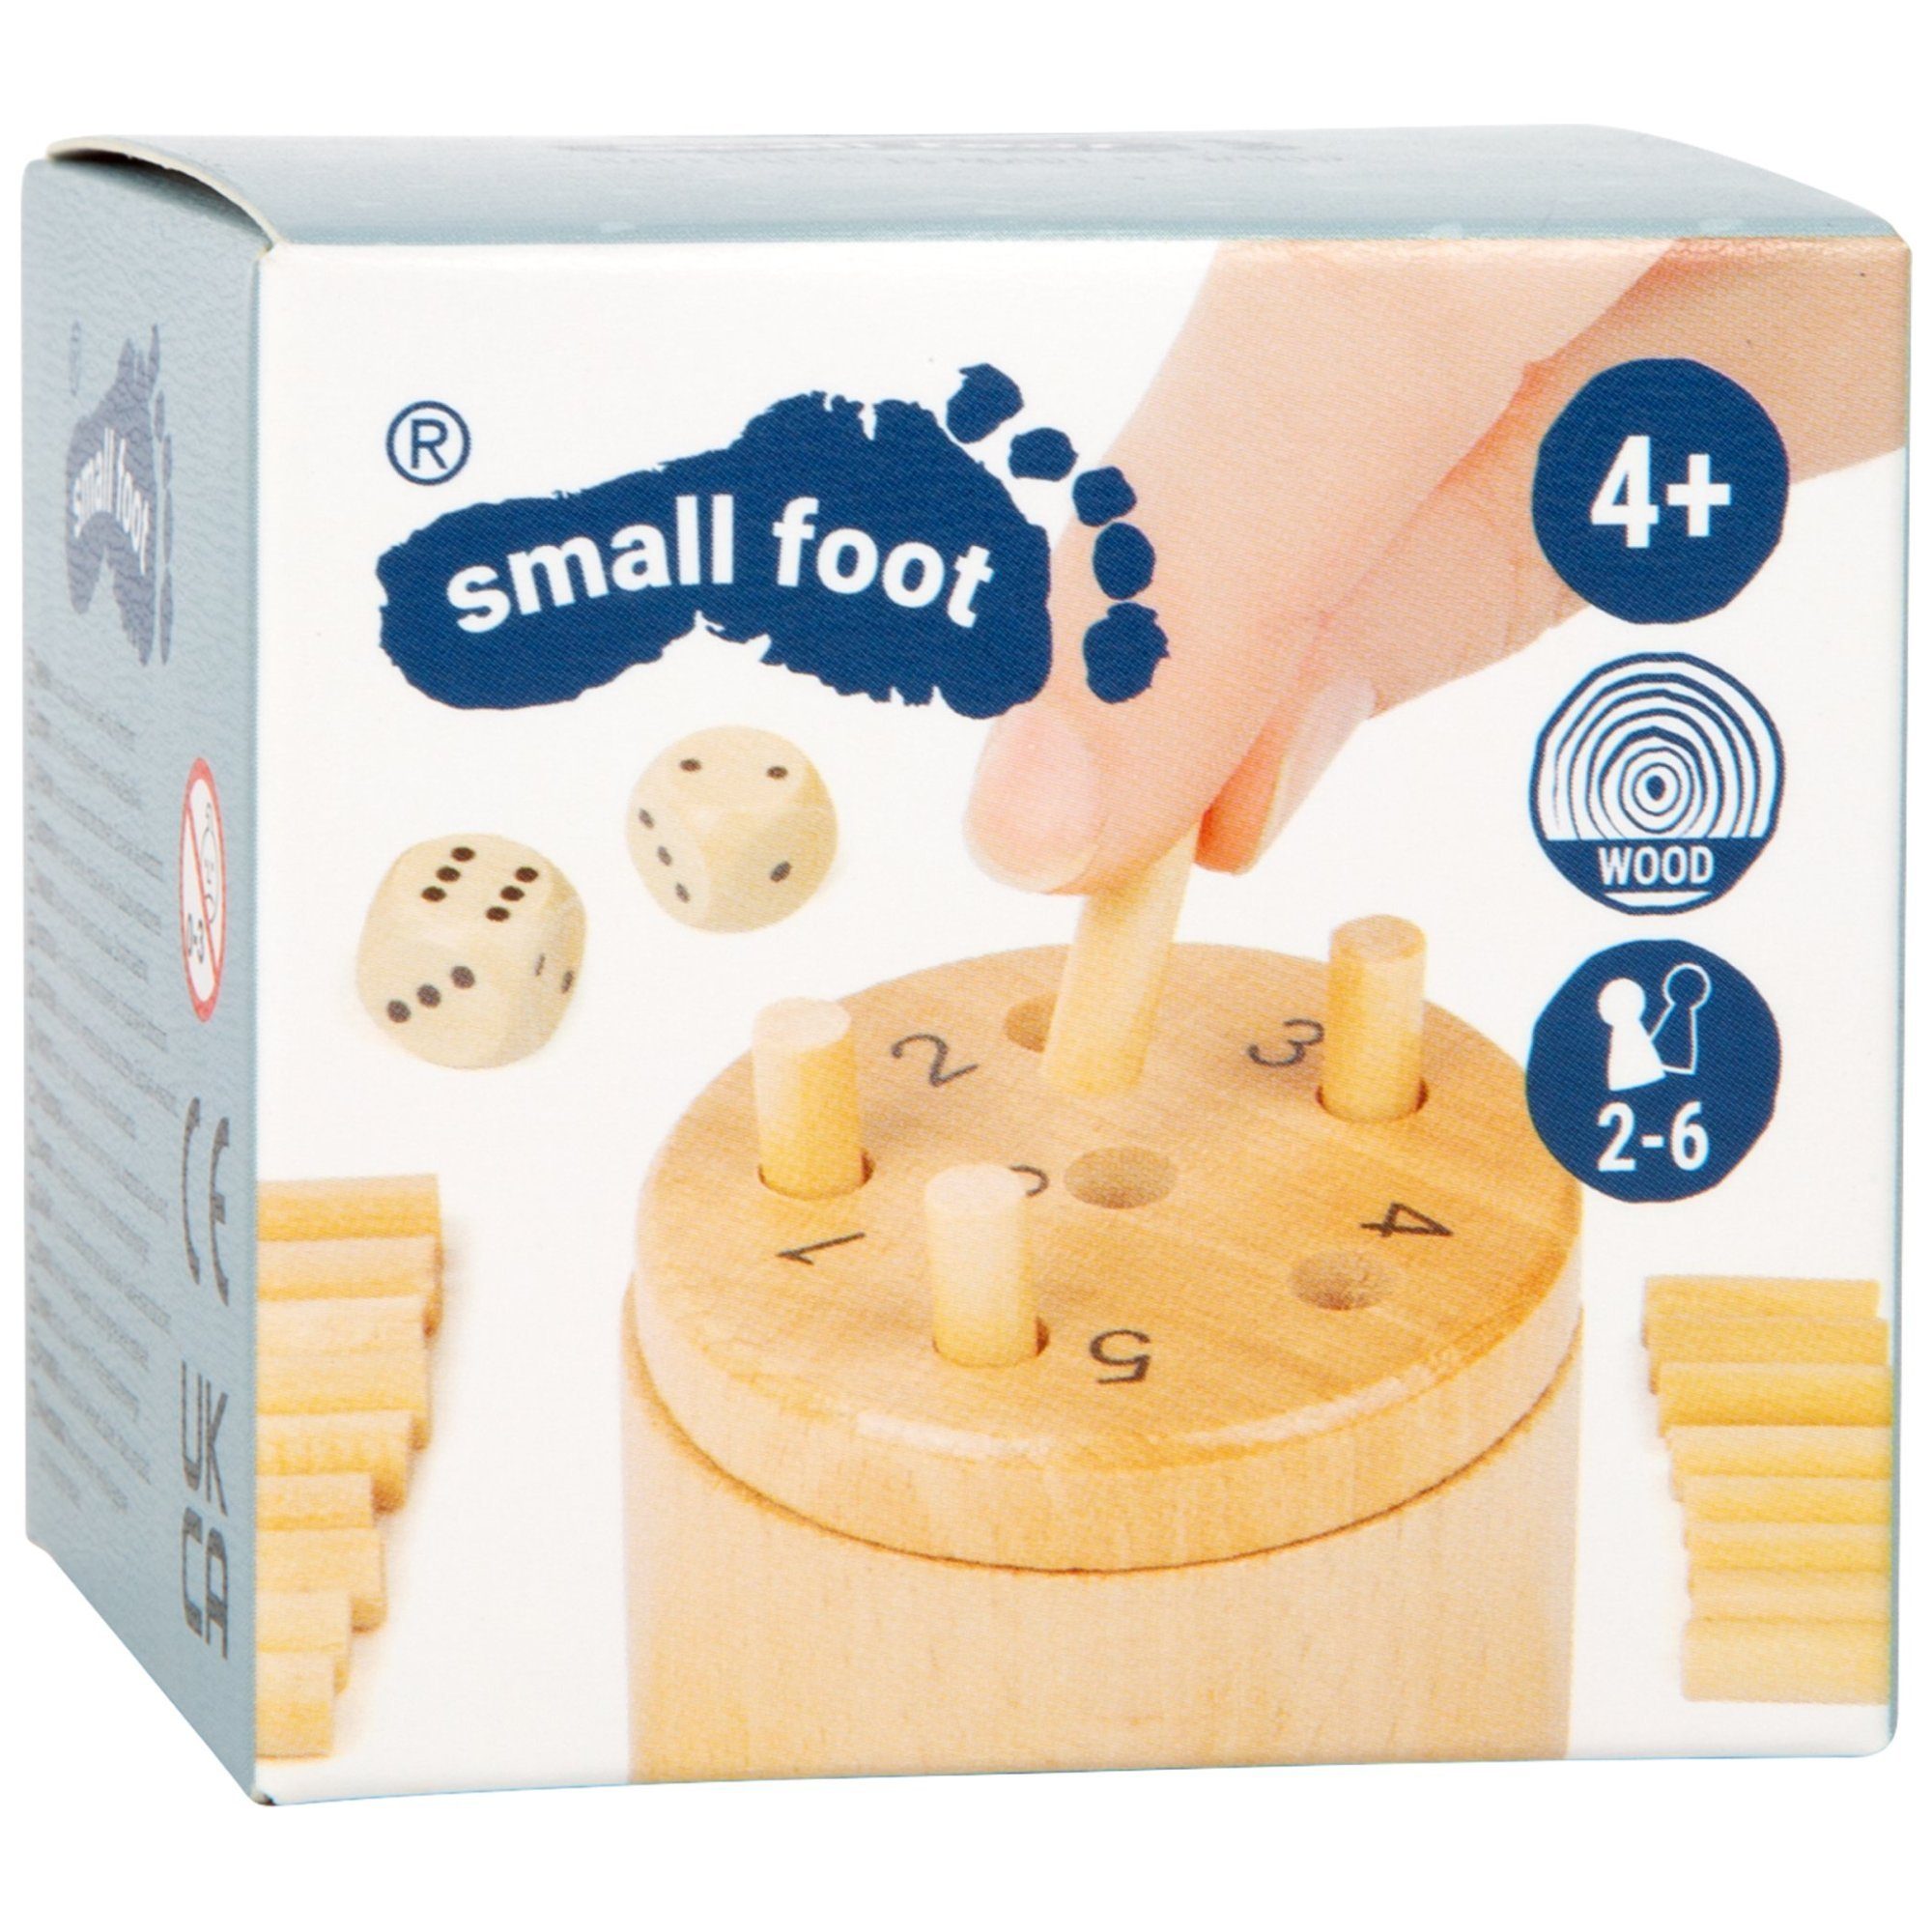 Small foot raus Foot 6 Würfelspiel small Spiel,